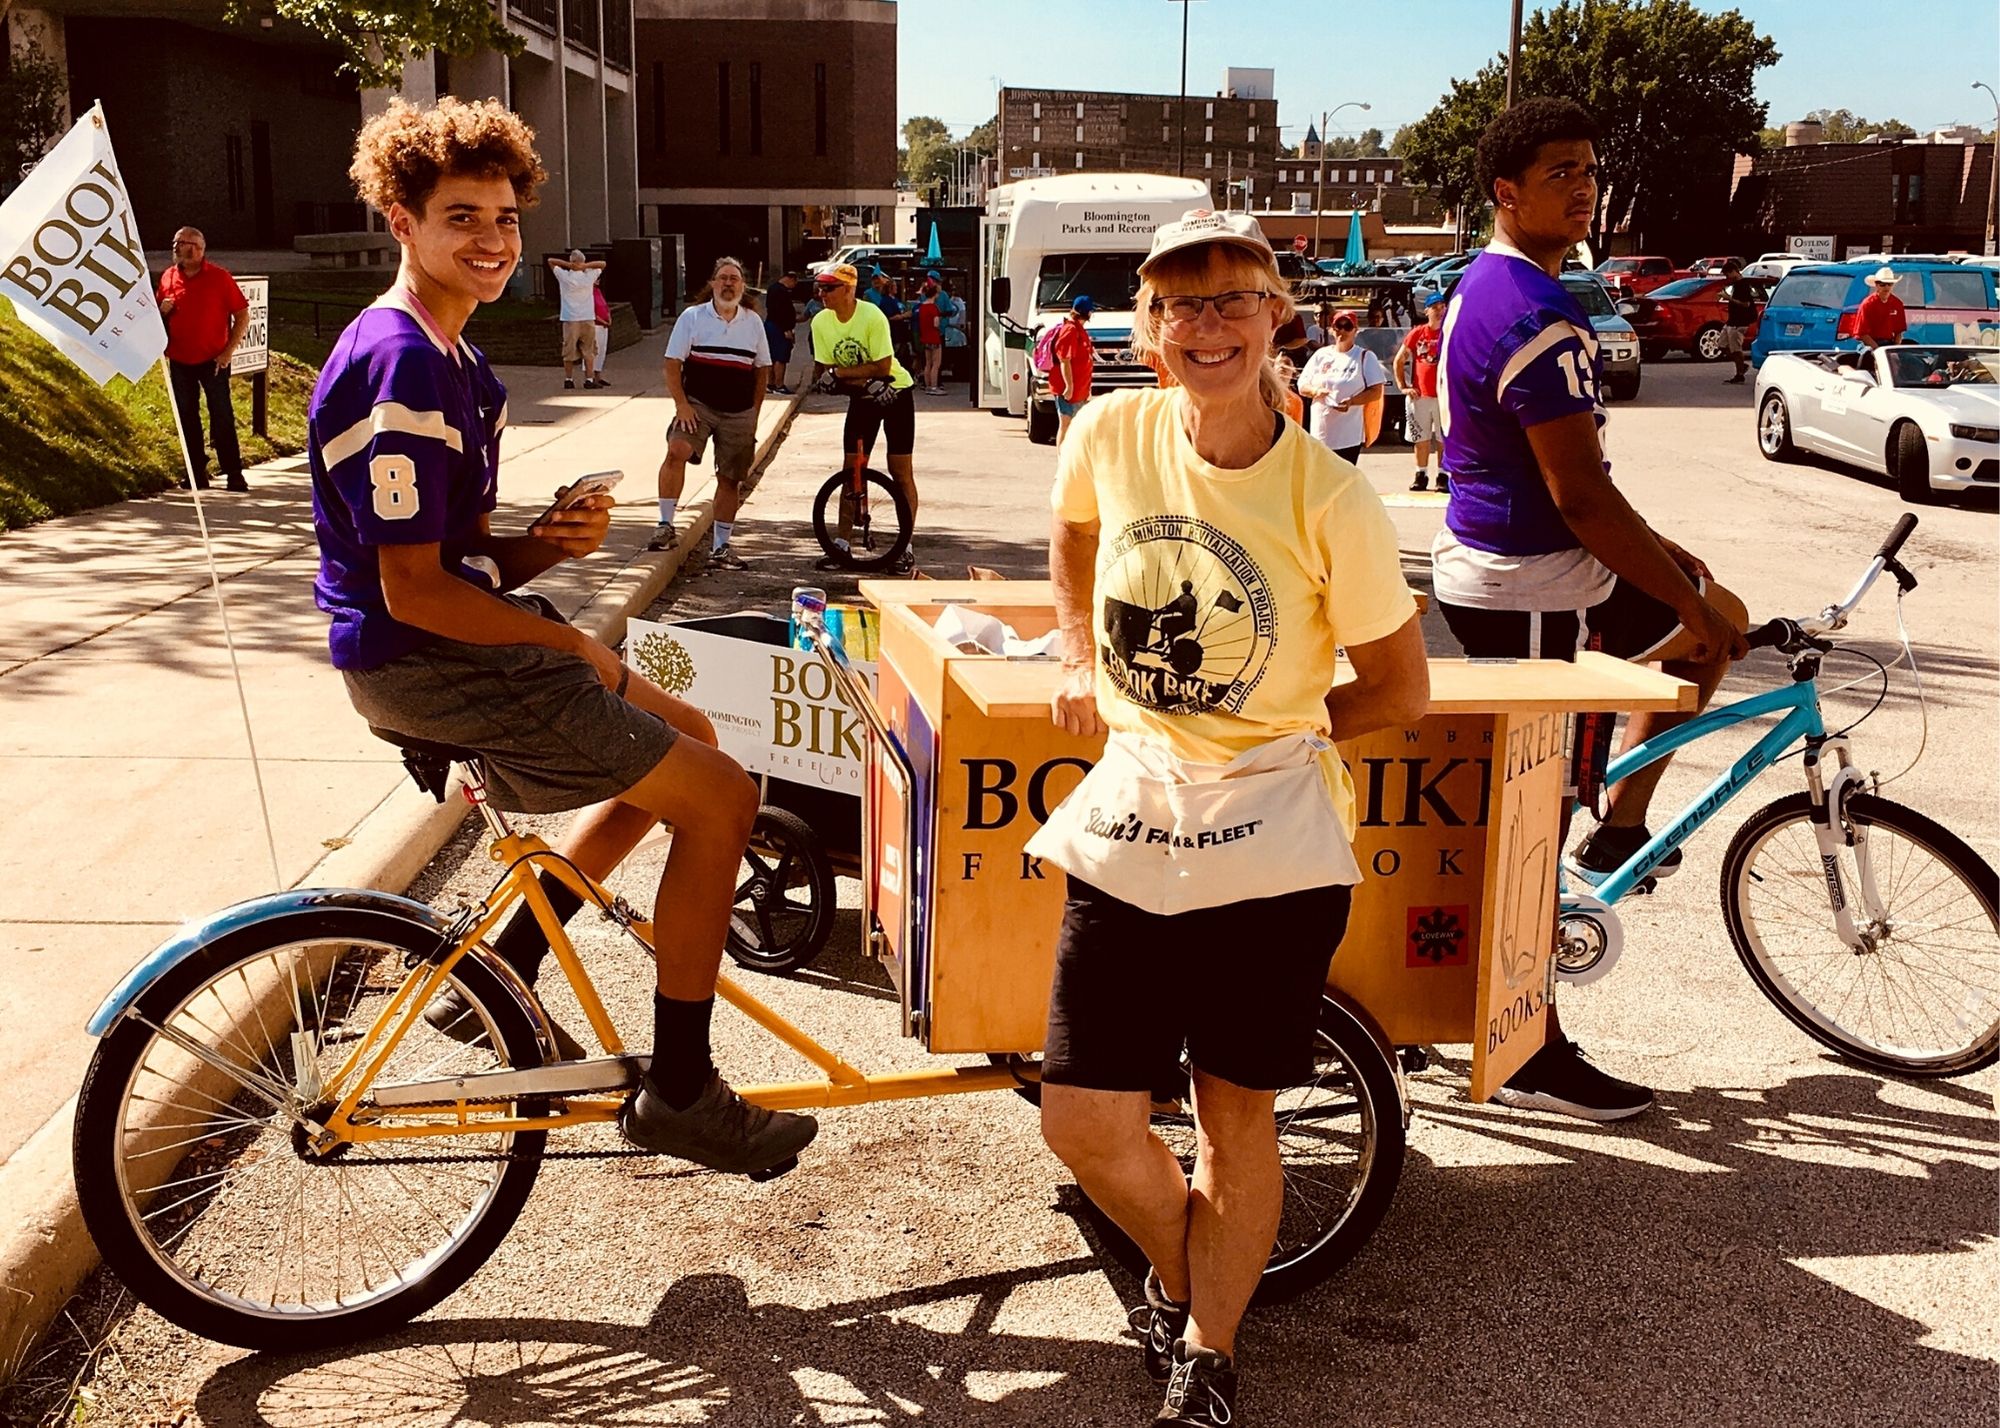 Karen schmidt standing in front of Book Bike - mobile library on bicycle